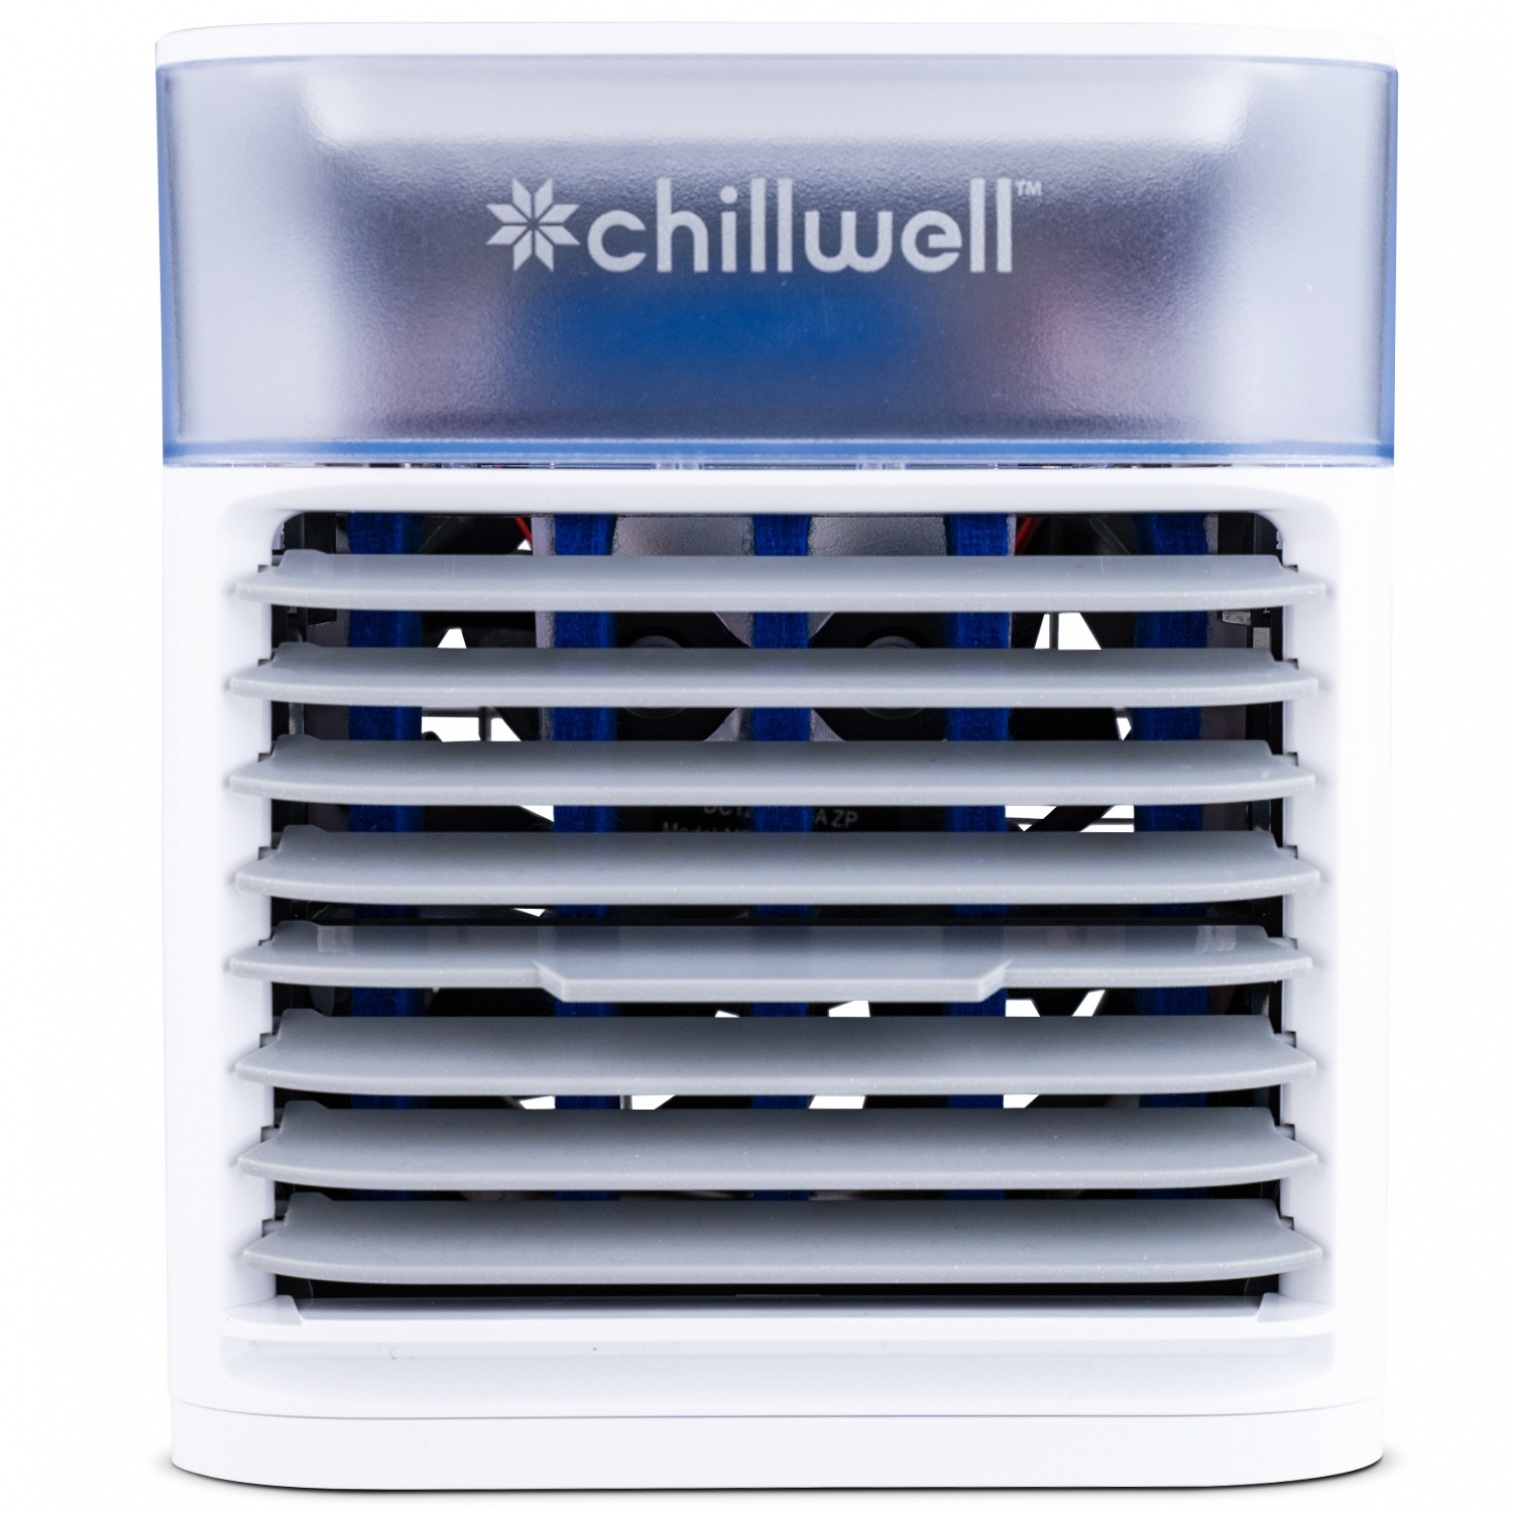 Chillwell AC Portable Air Conditioner Amazon